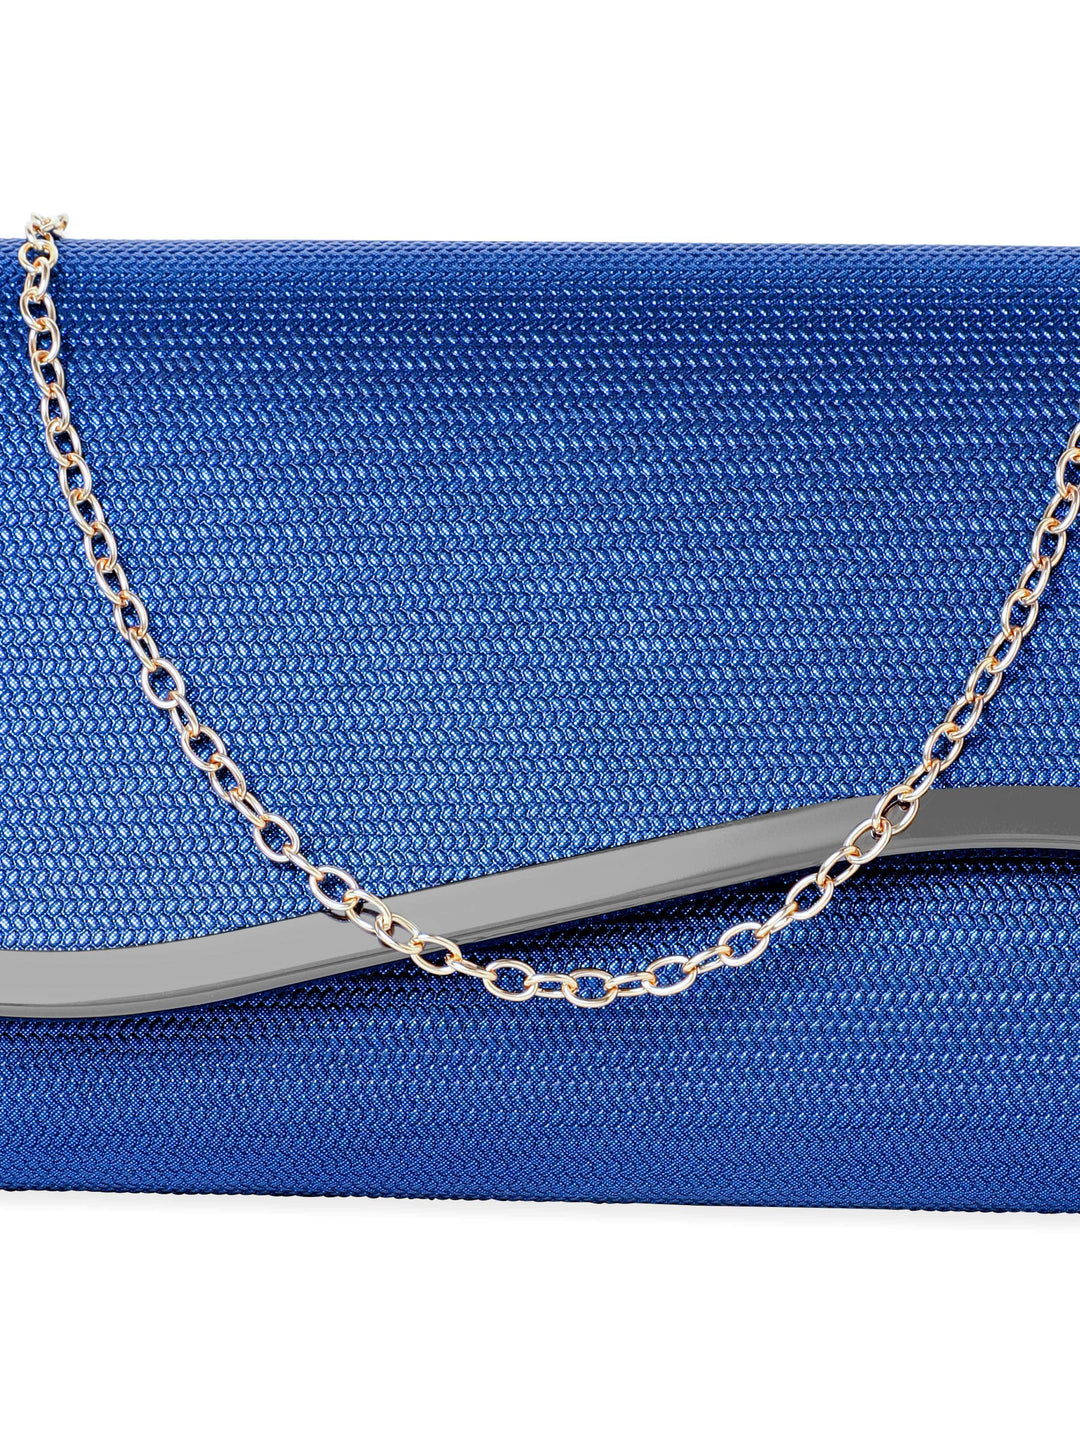 Rubans Artisanal Charm Handcrafted Blue Clutch Bag Handbag, Wallet Accessories & Clutches